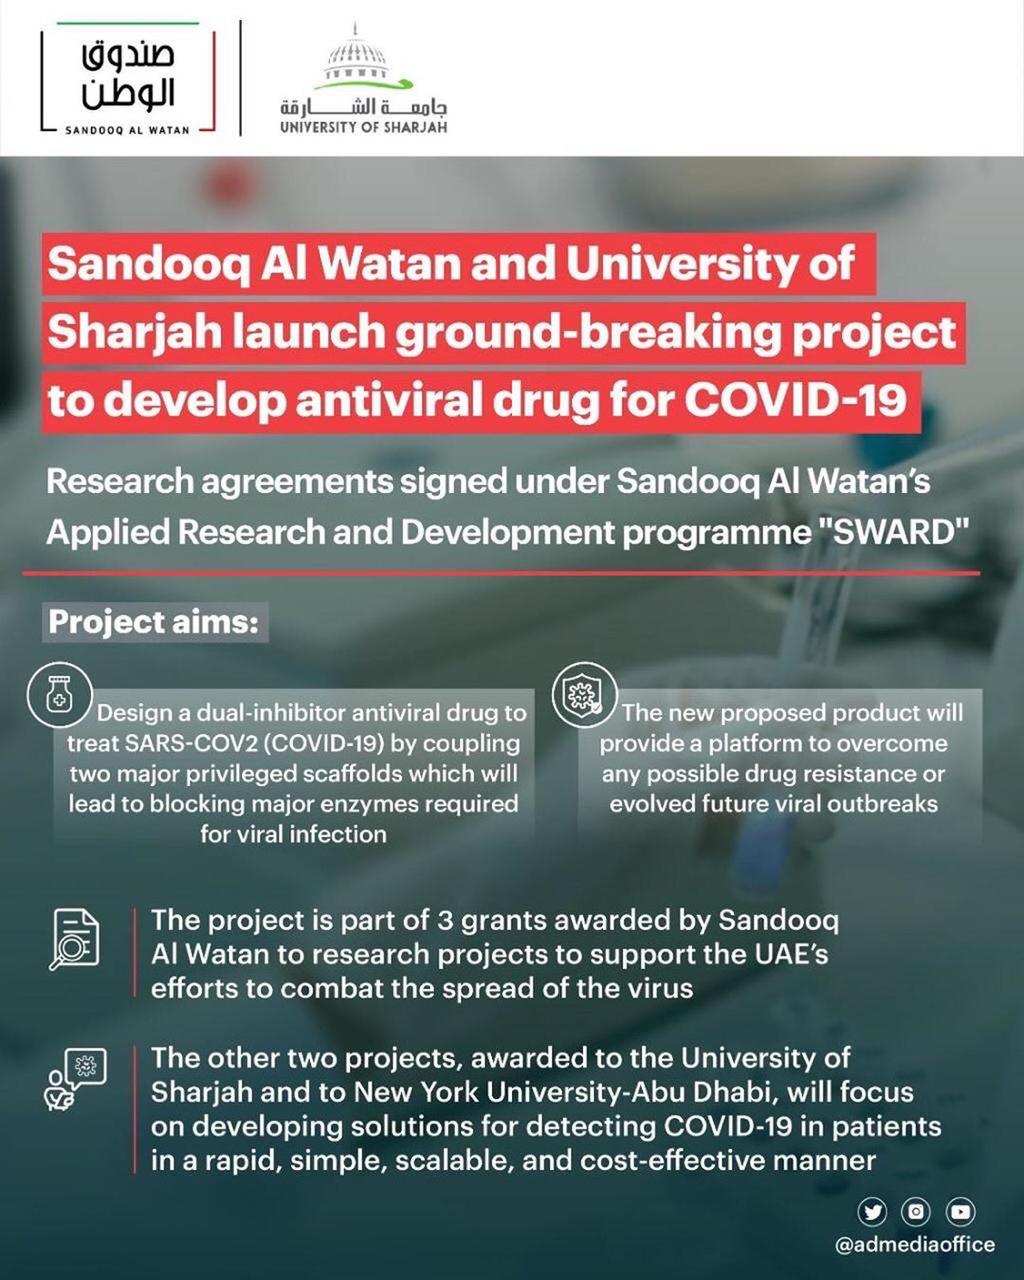 university-of-sharjah-sandooq-al-watan-launch-project-to-develop-antiviral-drug-for-covid19